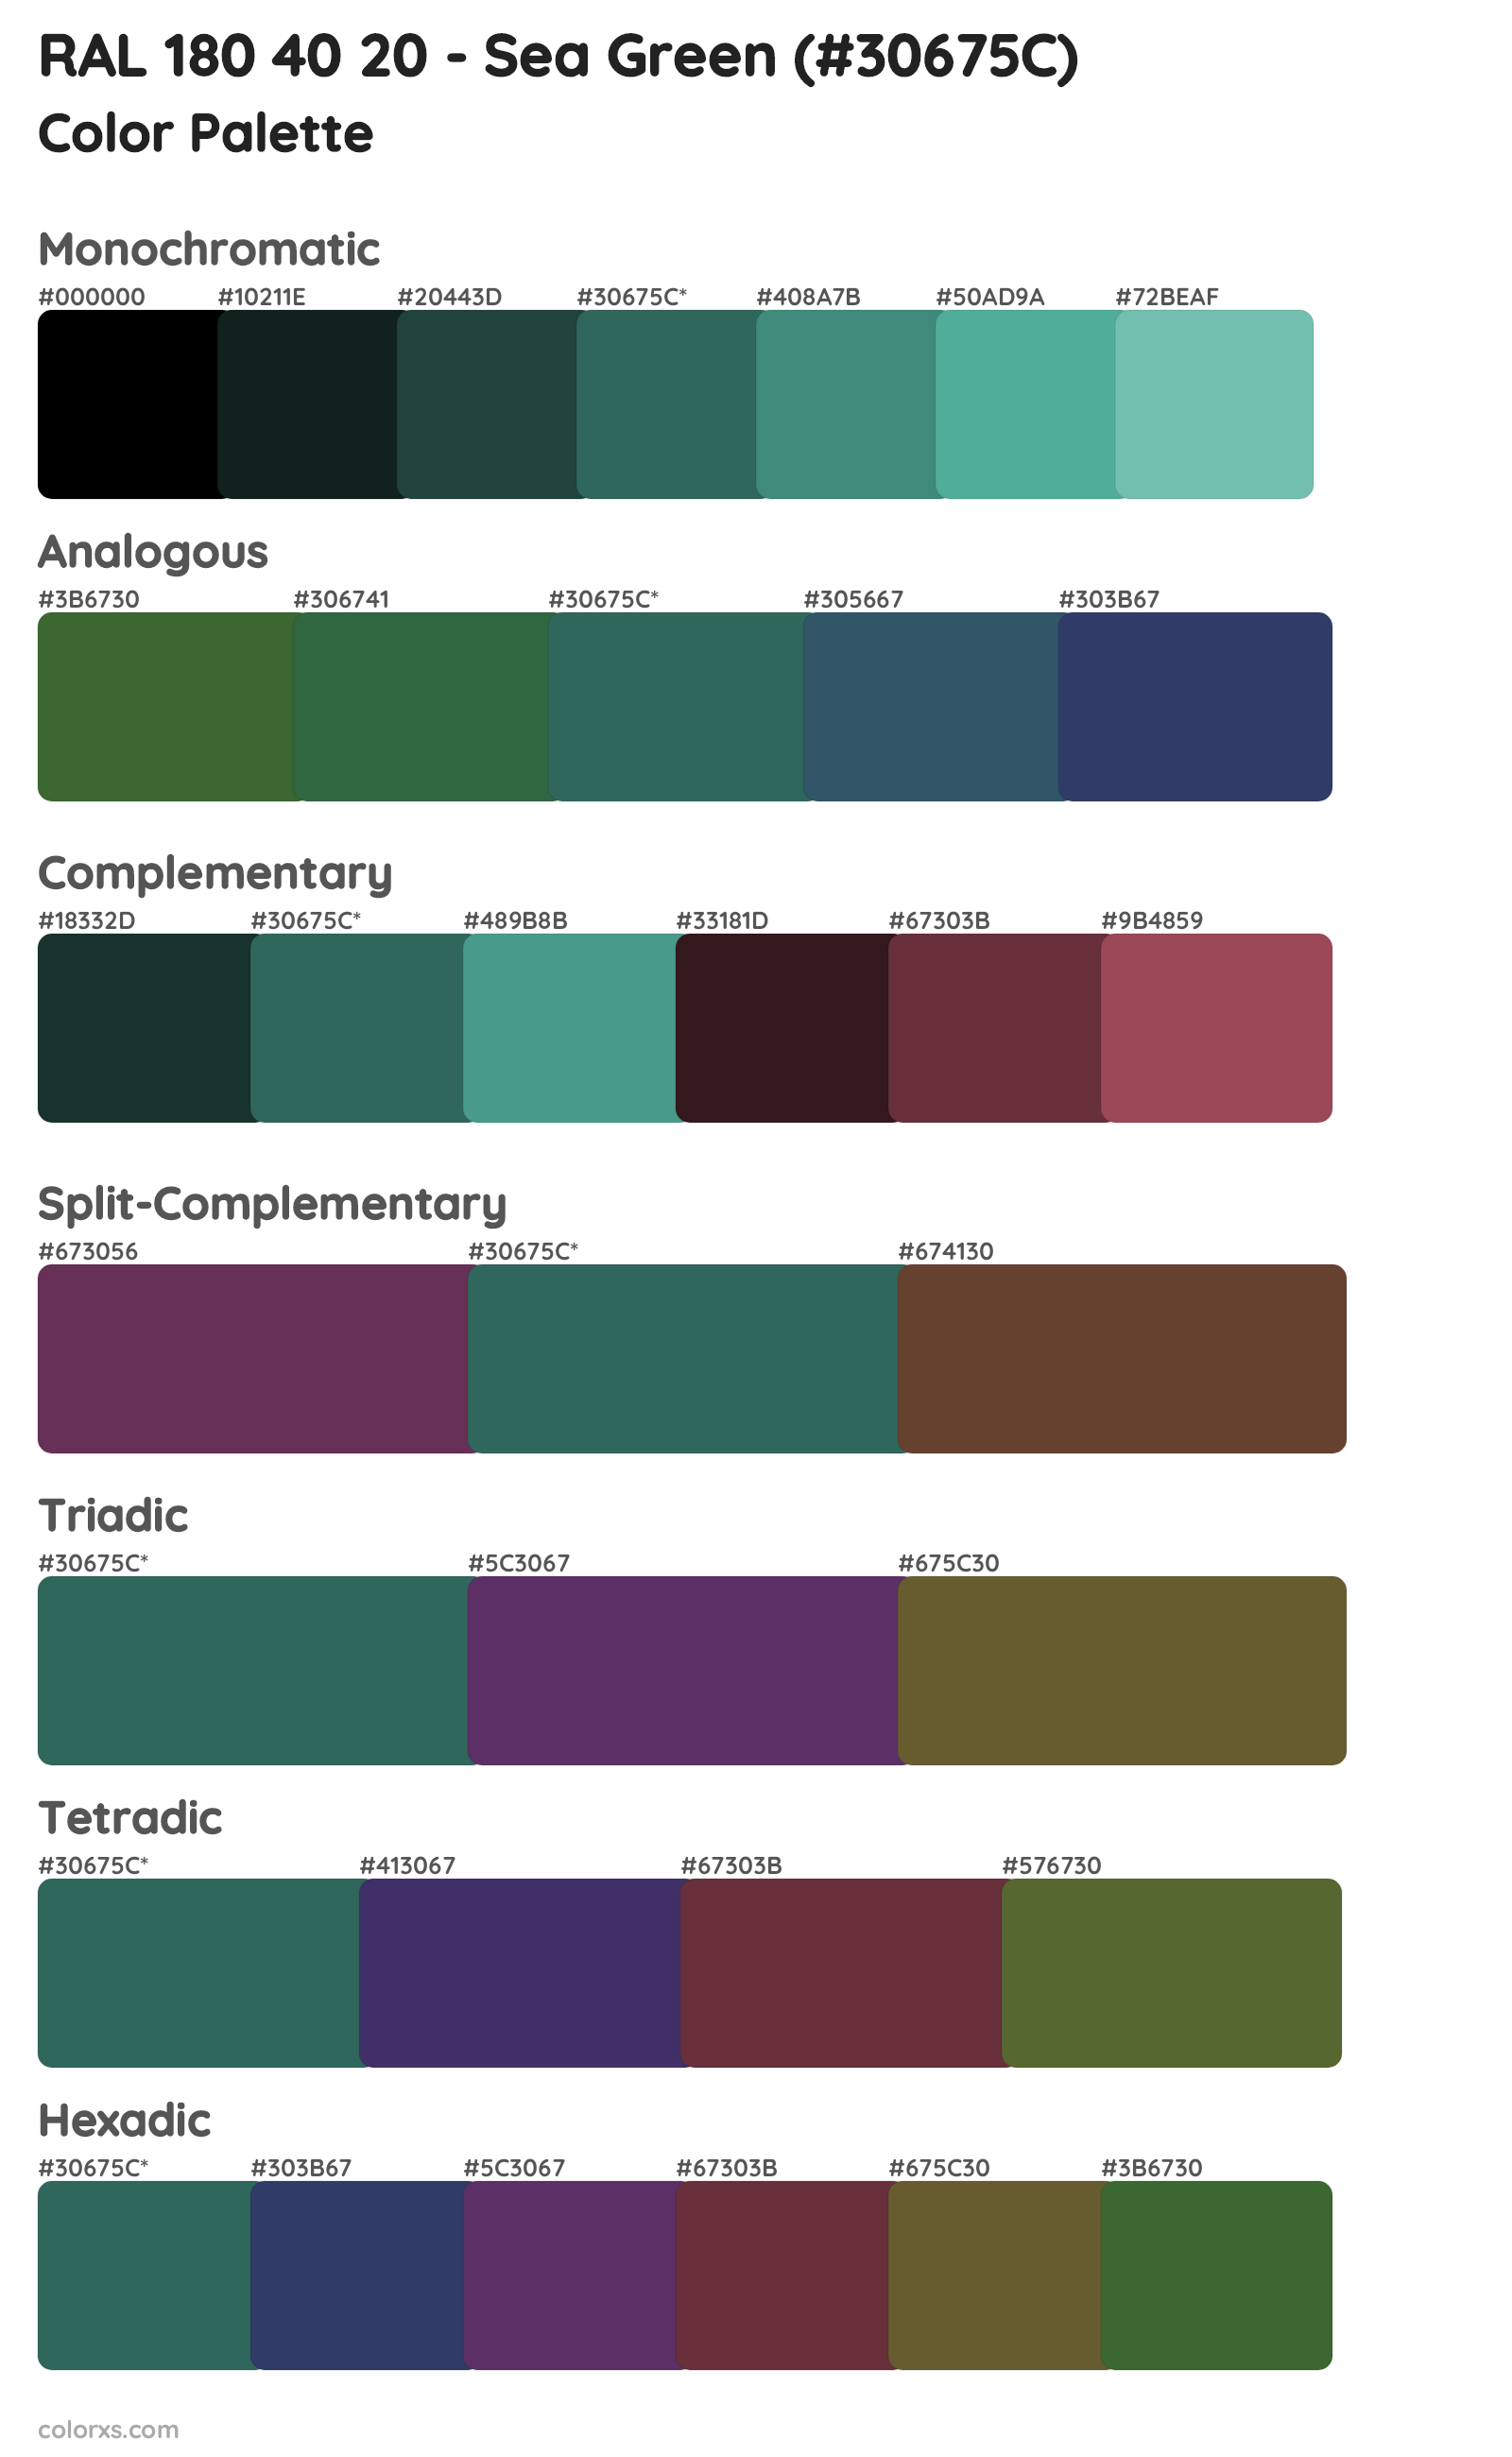 RAL 180 40 20 - Sea Green Color Scheme Palettes